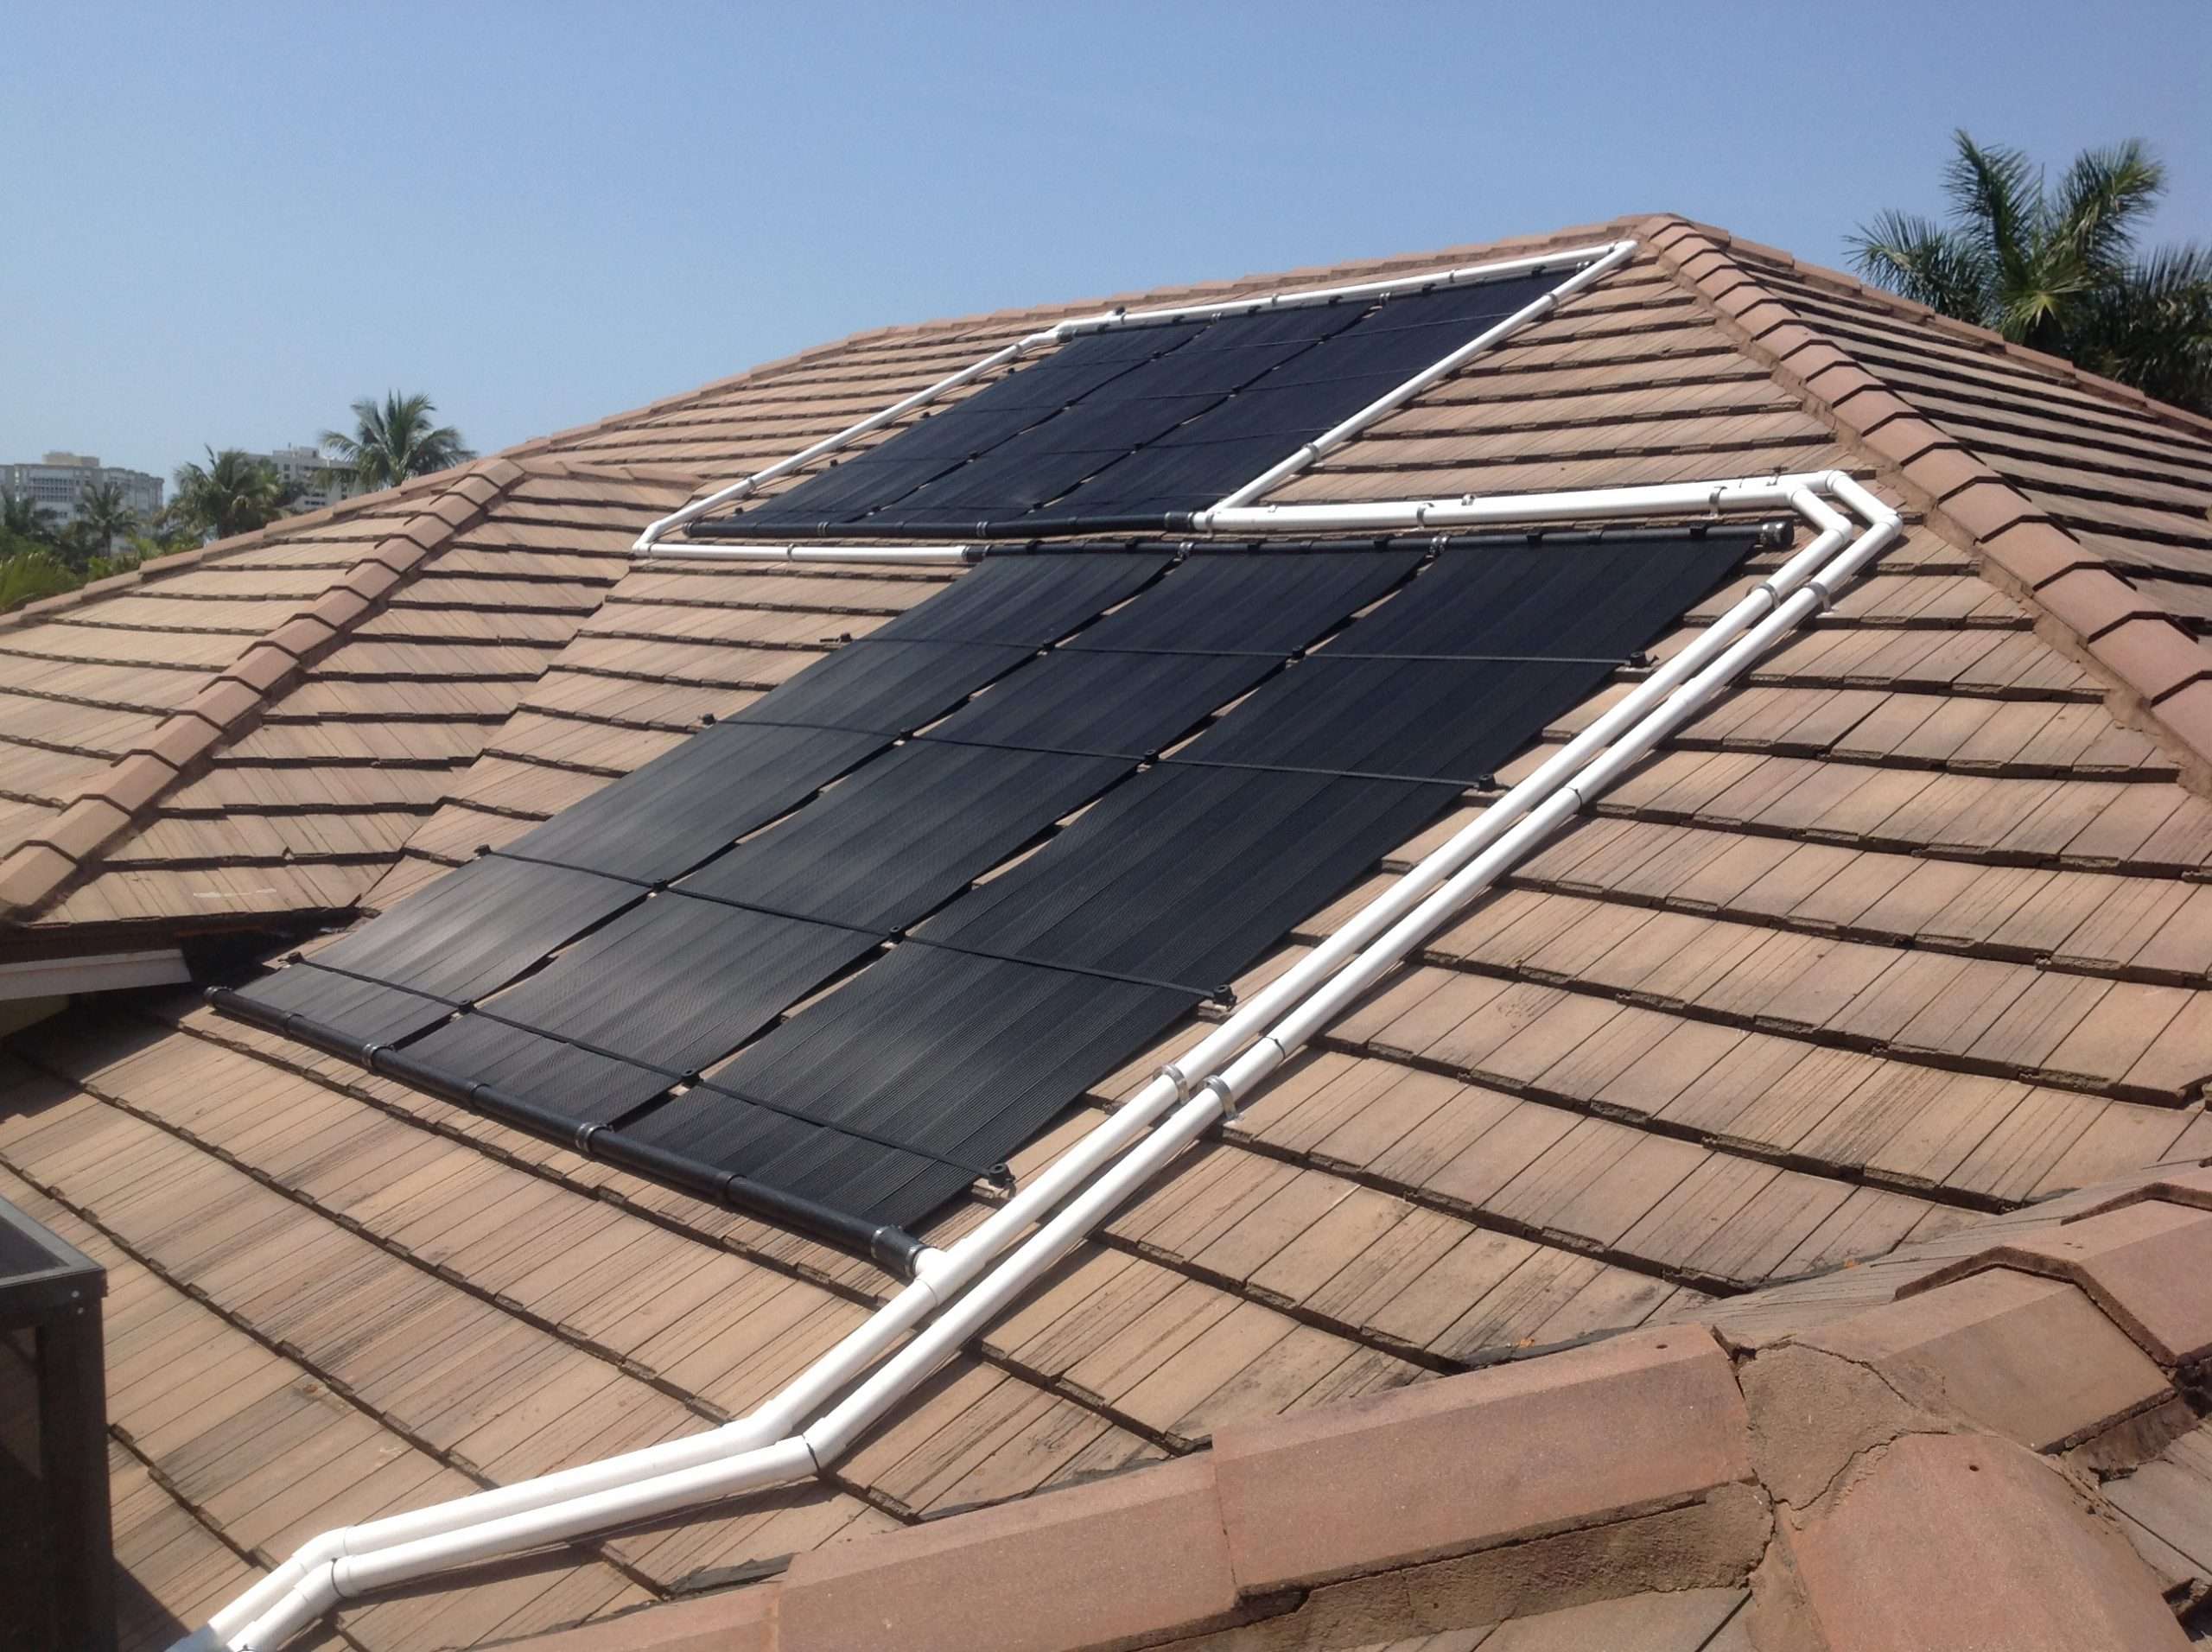 Naples Flat Tile Roof Gets Solar Pool Heater